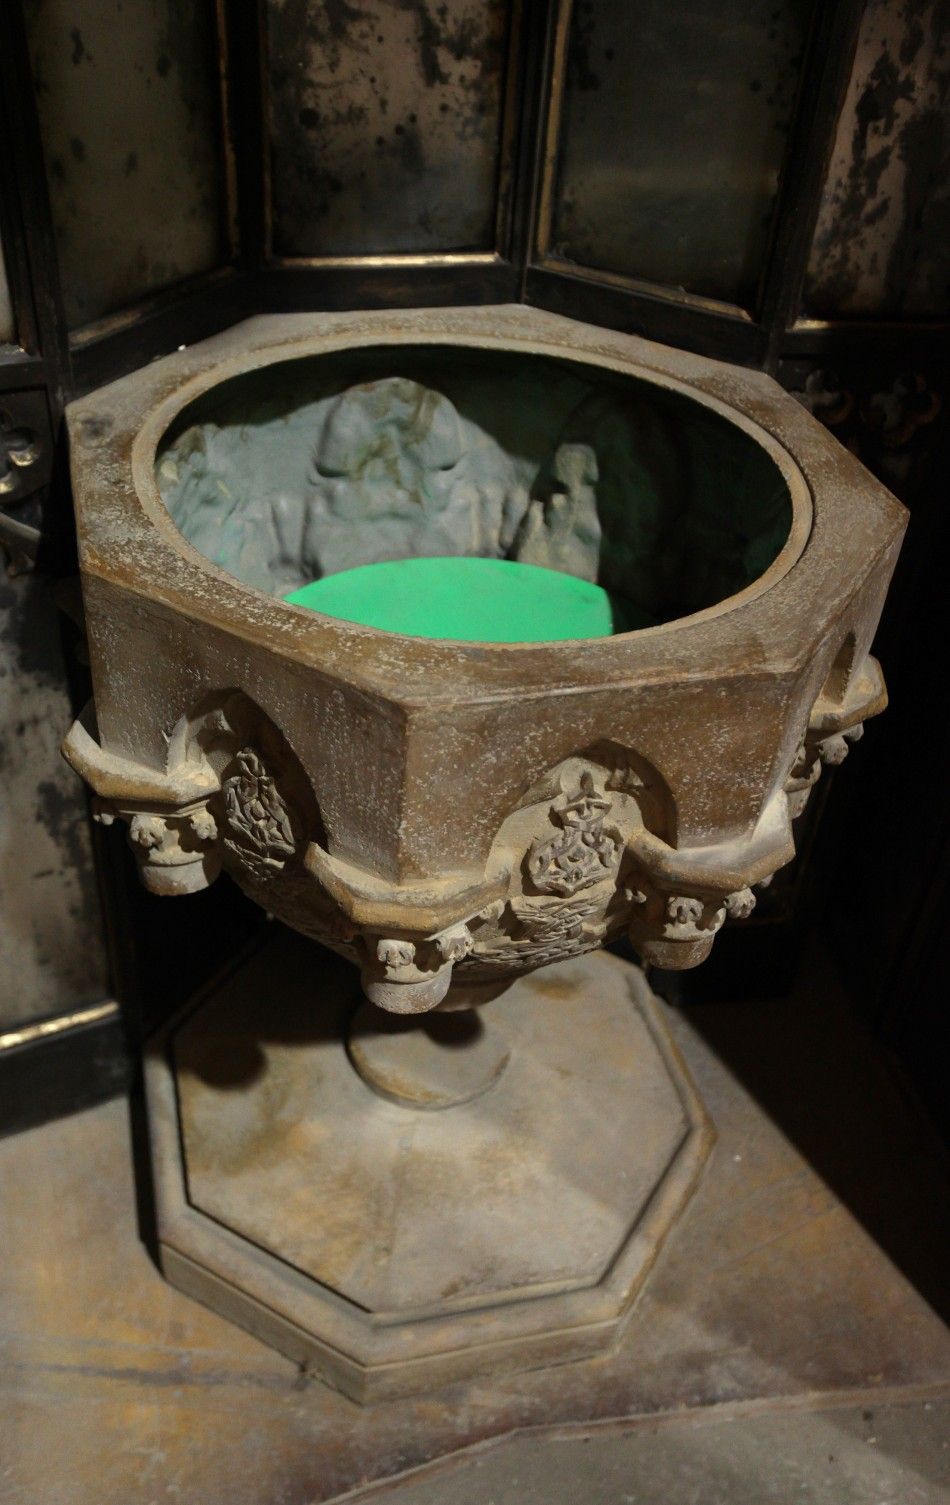 A green screen is seen inside the pensieve